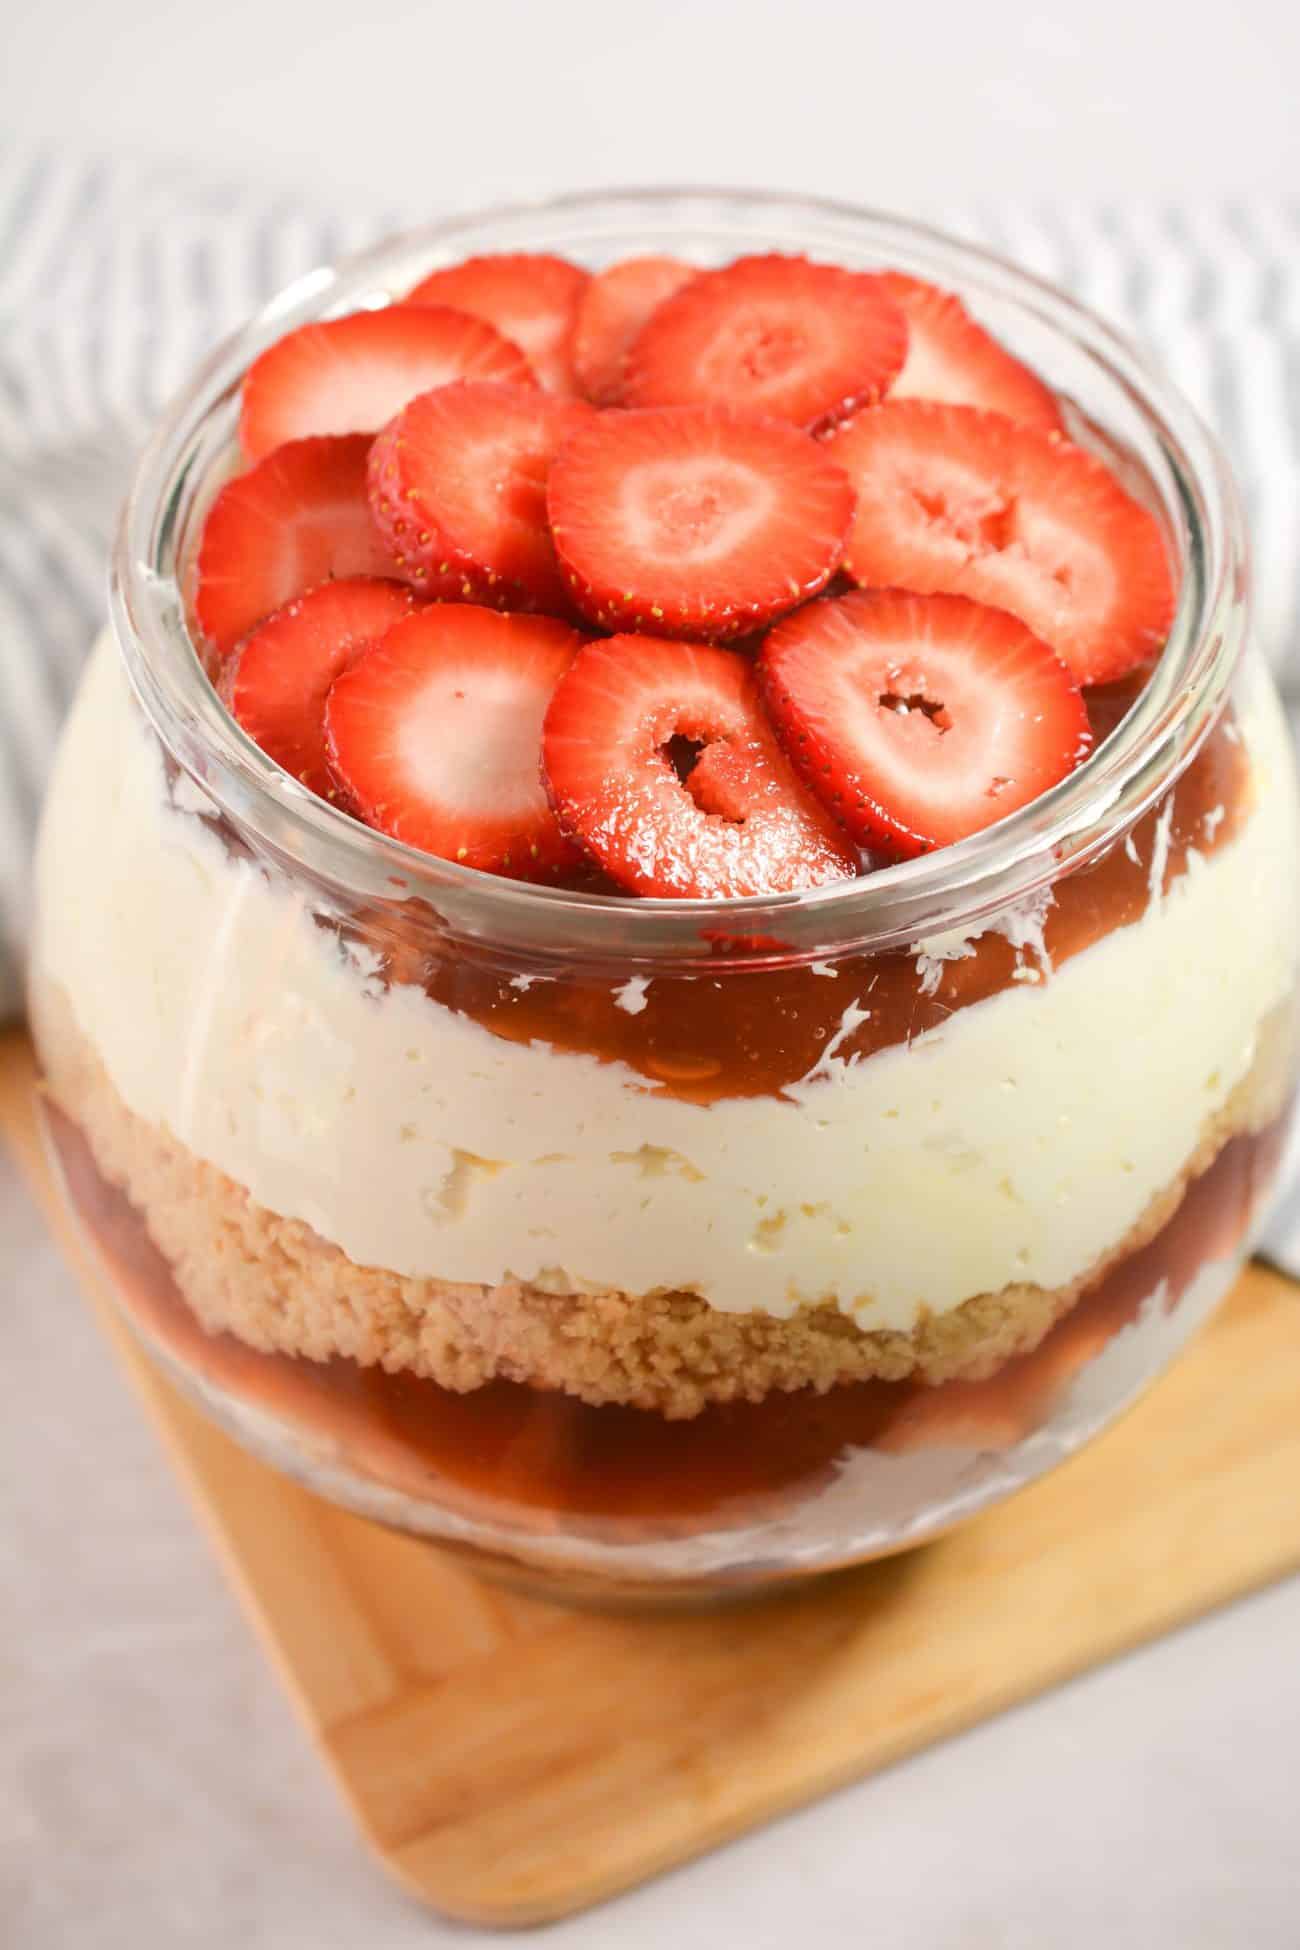 Strawberry Cheesecake Triffle